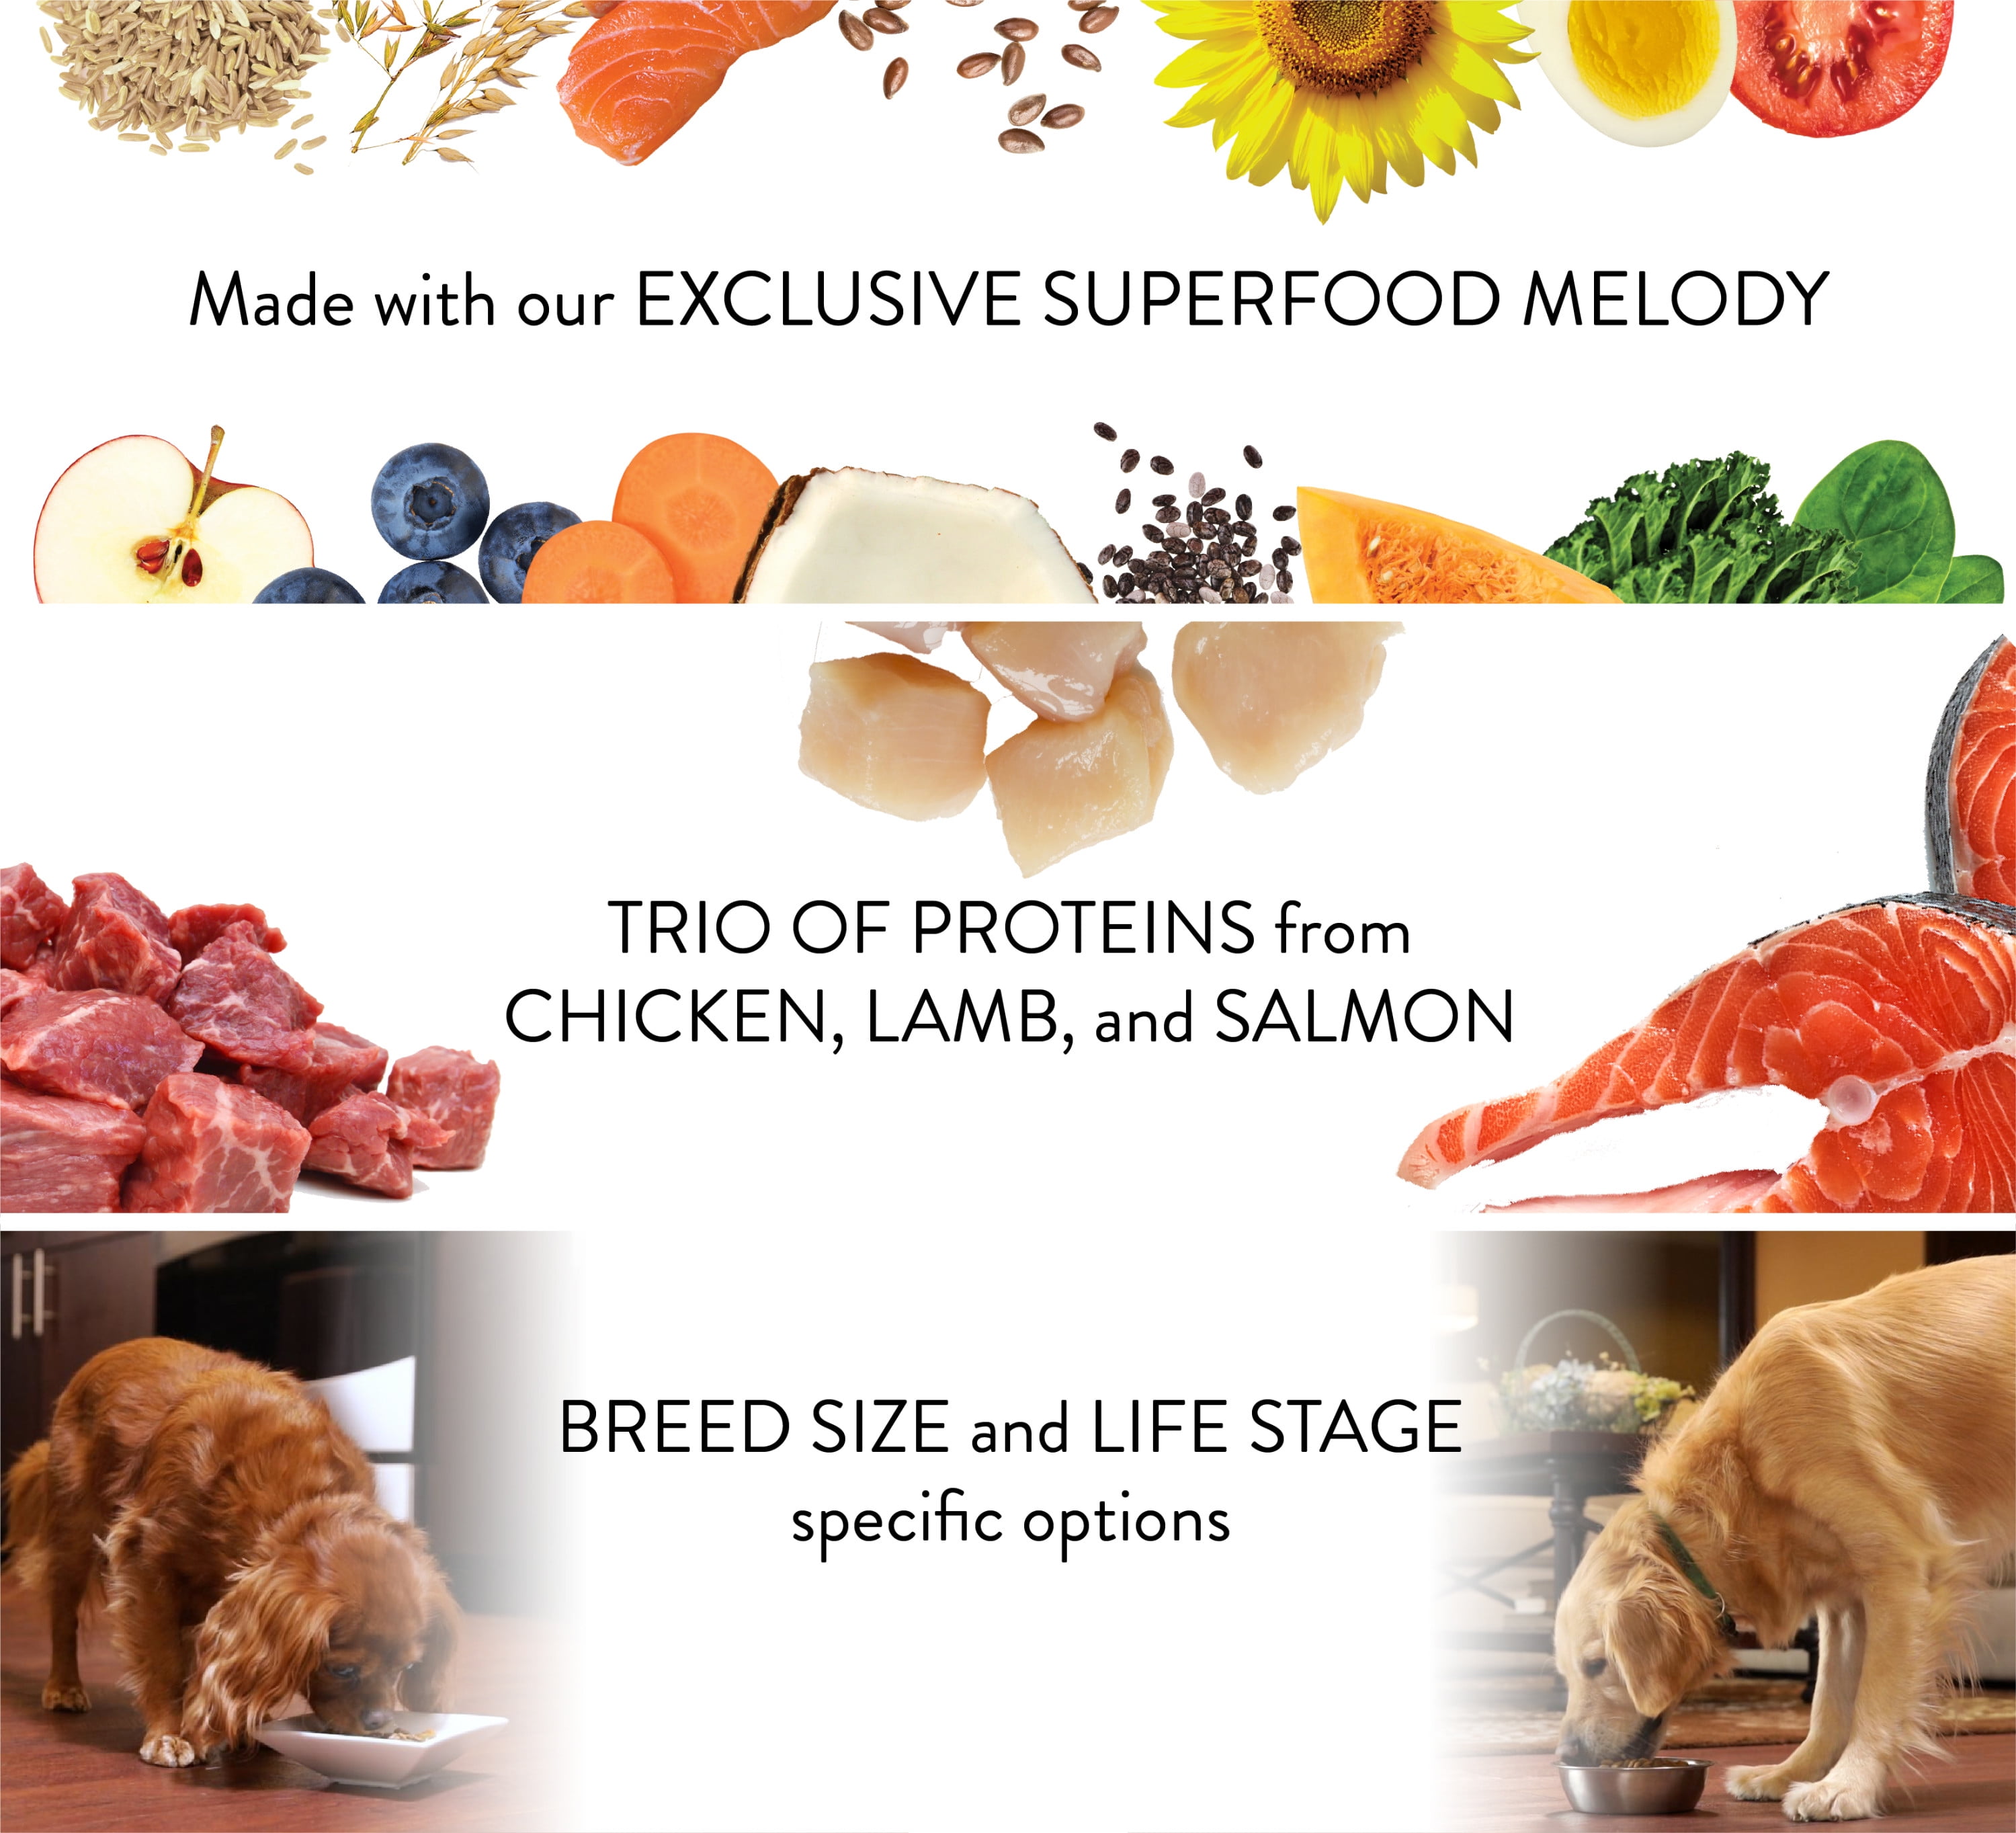 ultra dog food weight management